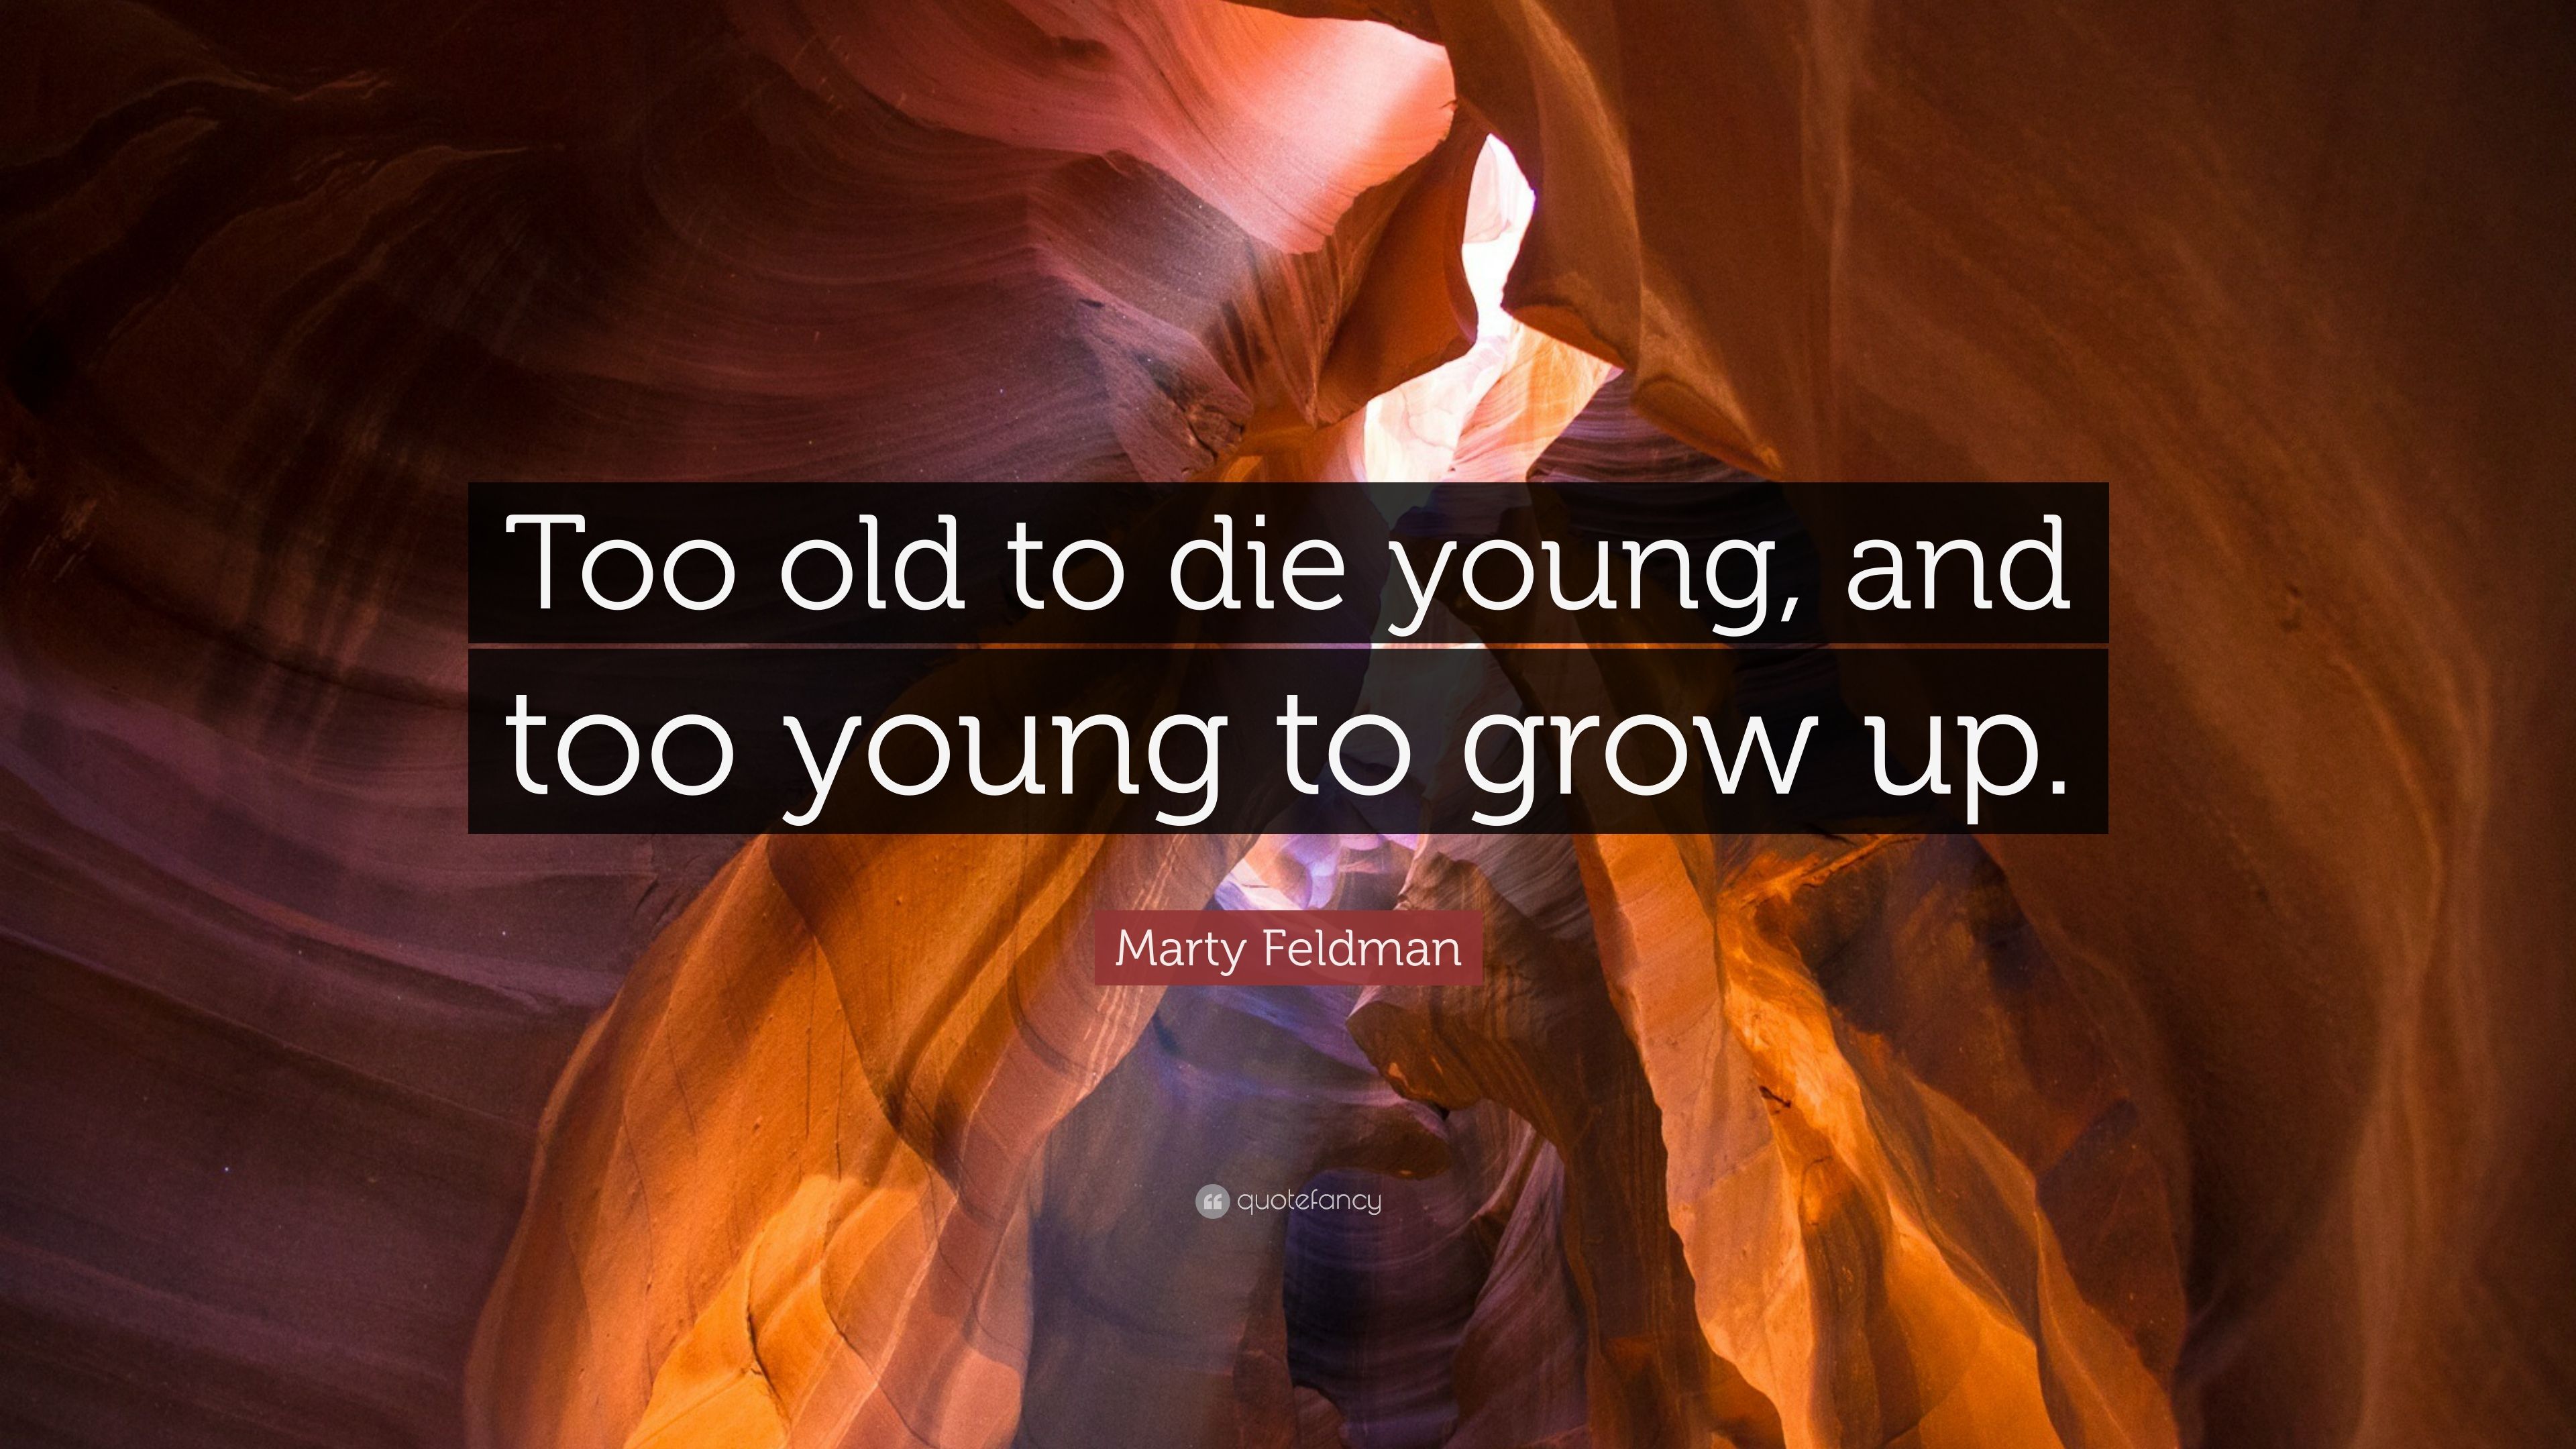 Marty Feldman Quote: “Too old to die .quotefancy.com